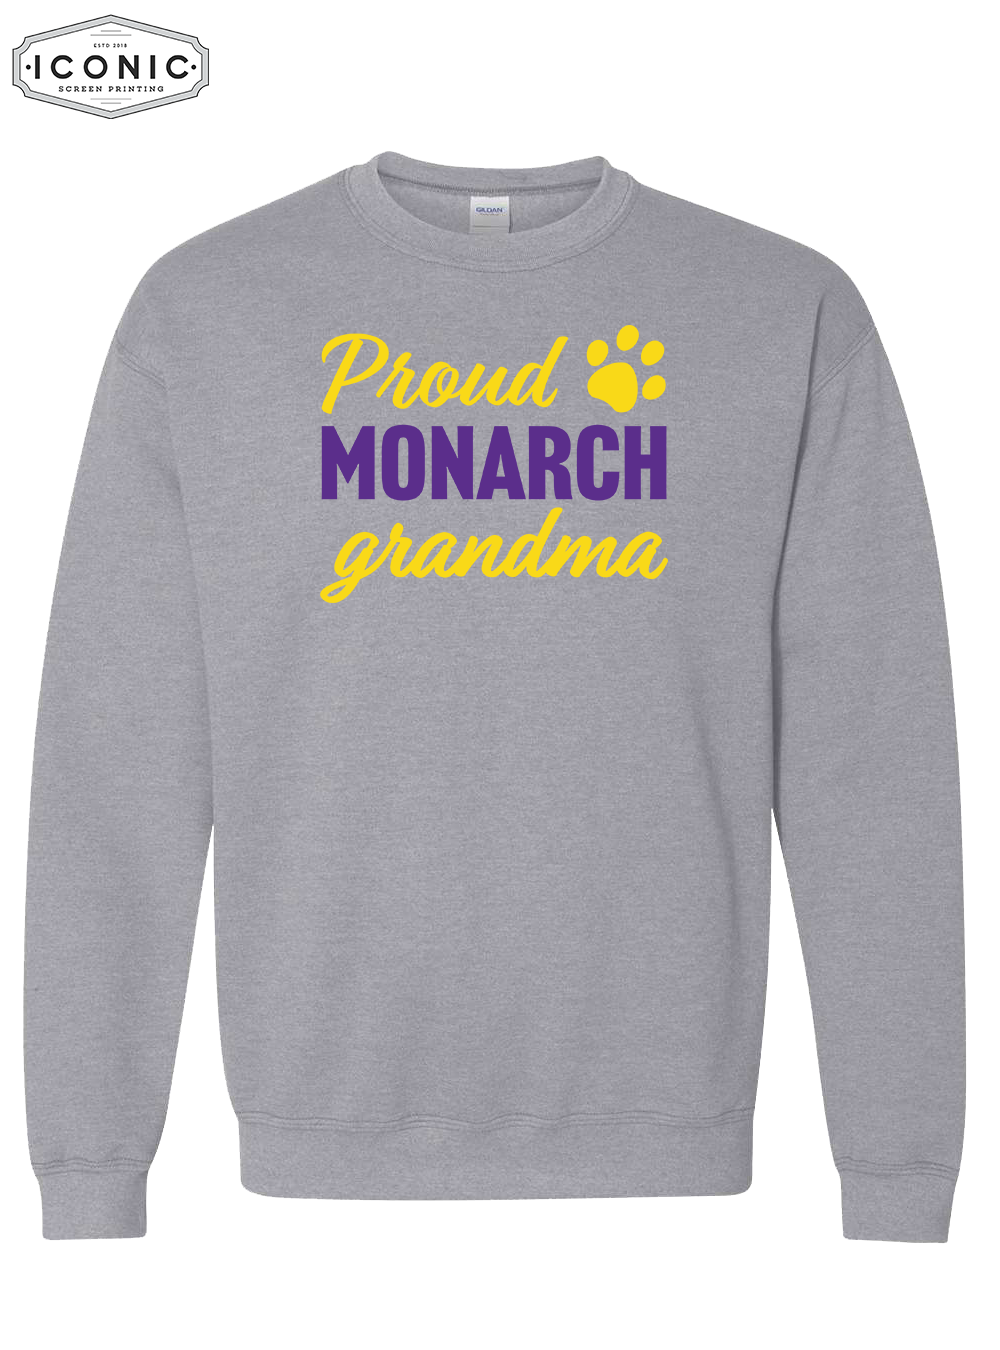 Proud Monarch Grandma/Grandpa - Heavy Blend Sweatshirt